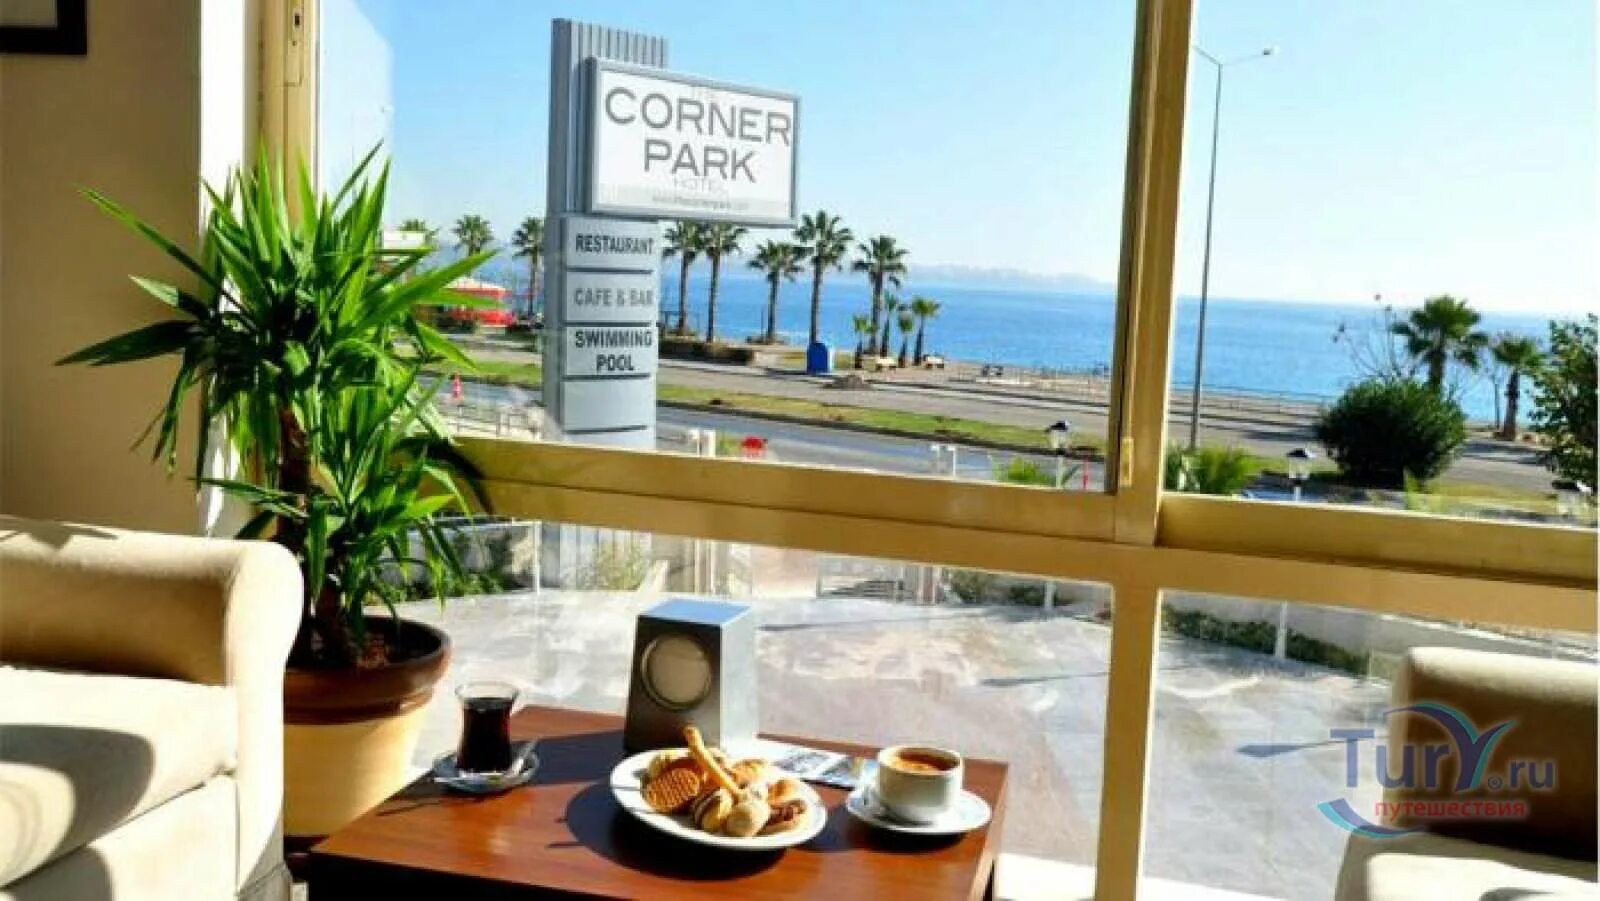 The Corner Park Hotel Antalya. The Corner Park Hotel. Meltem Hotel 2 Анталия бар. The Corner Park Hotel Antalya фото номеров. Take corner